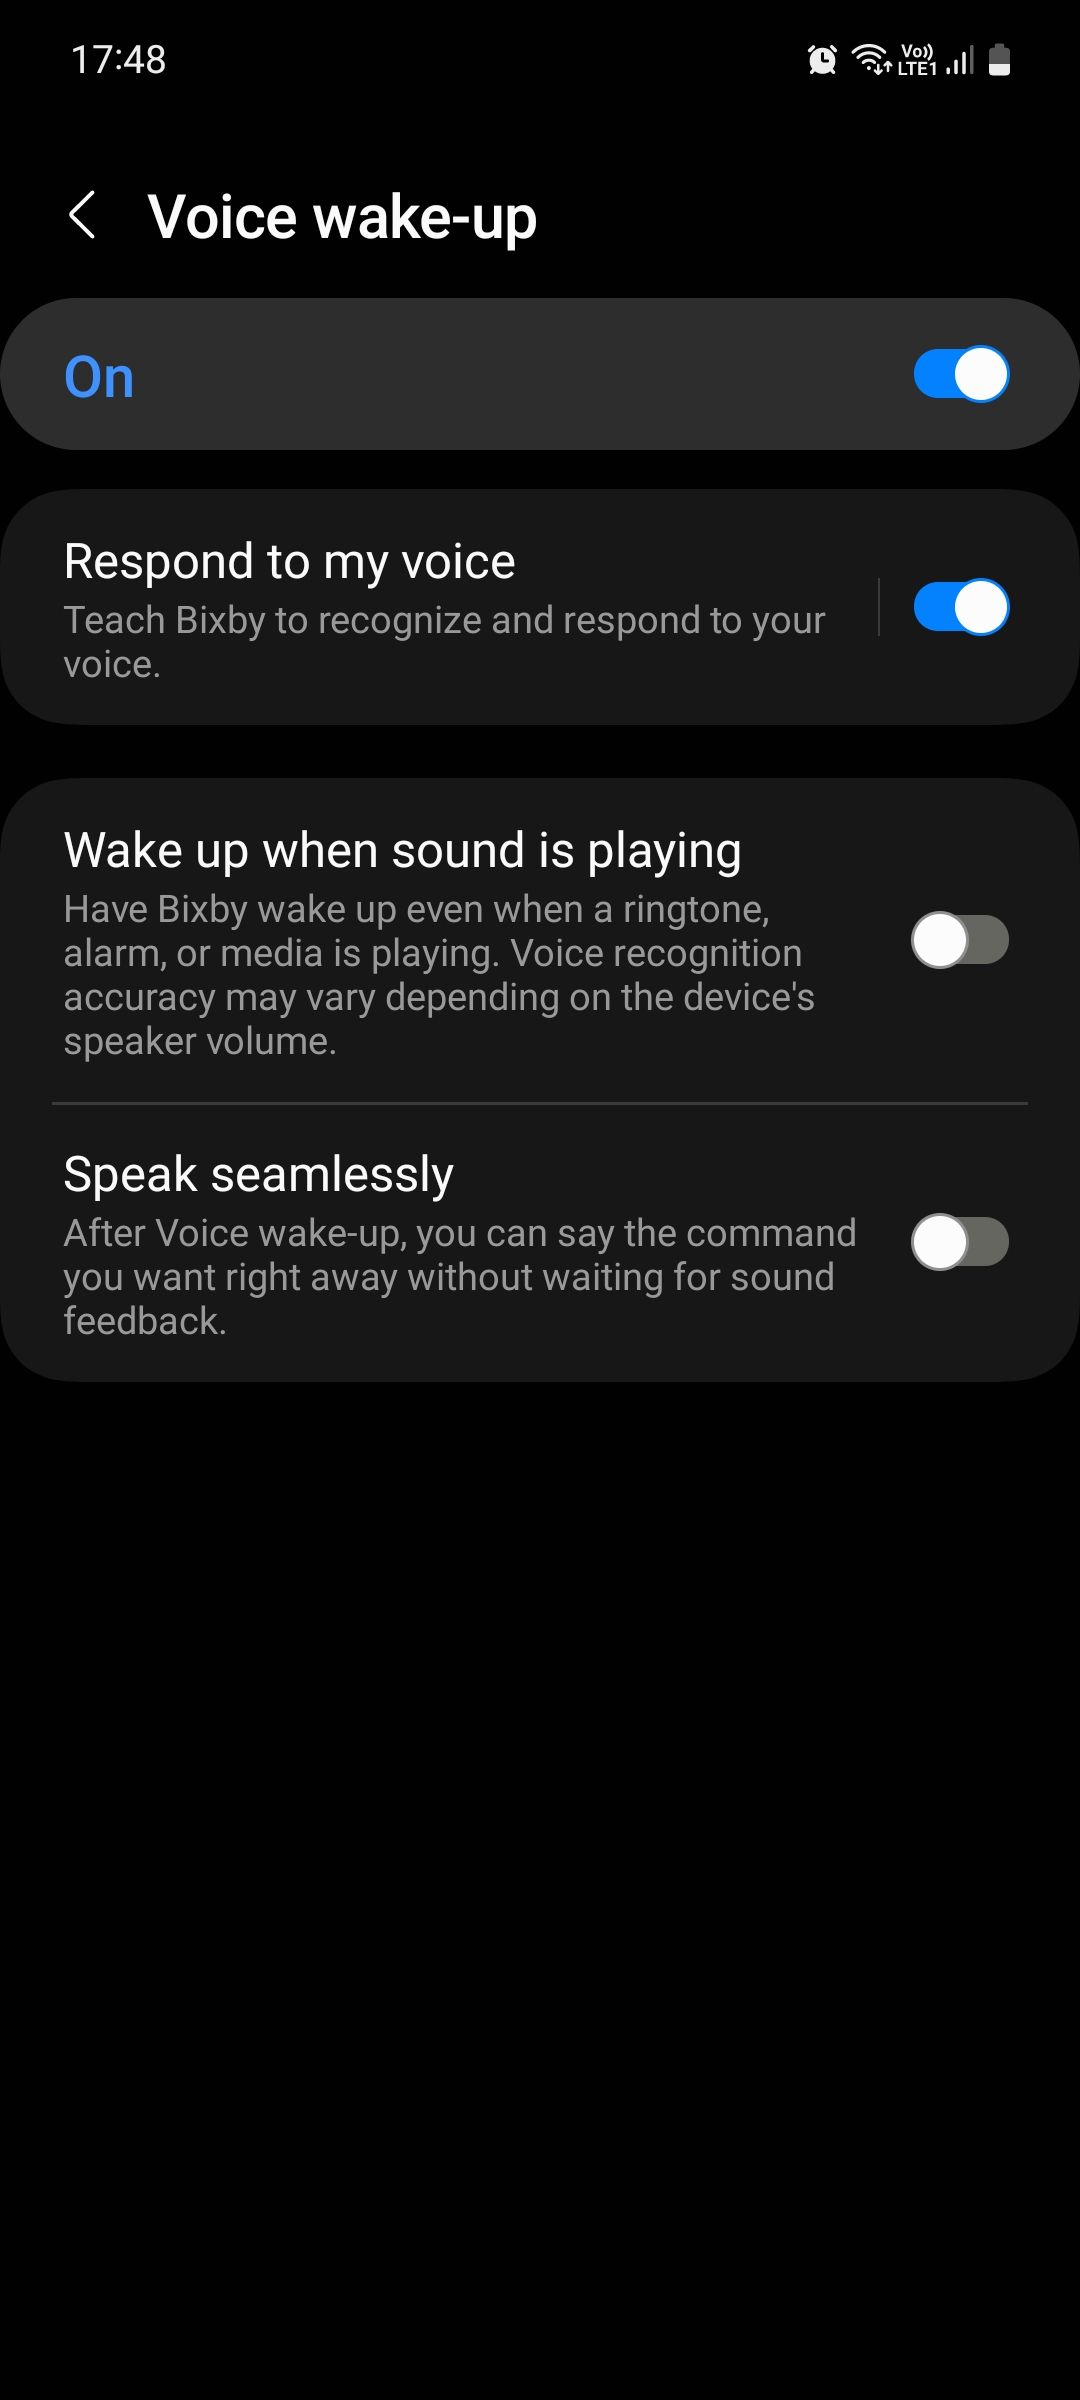 Bixby Voice wake-up menu